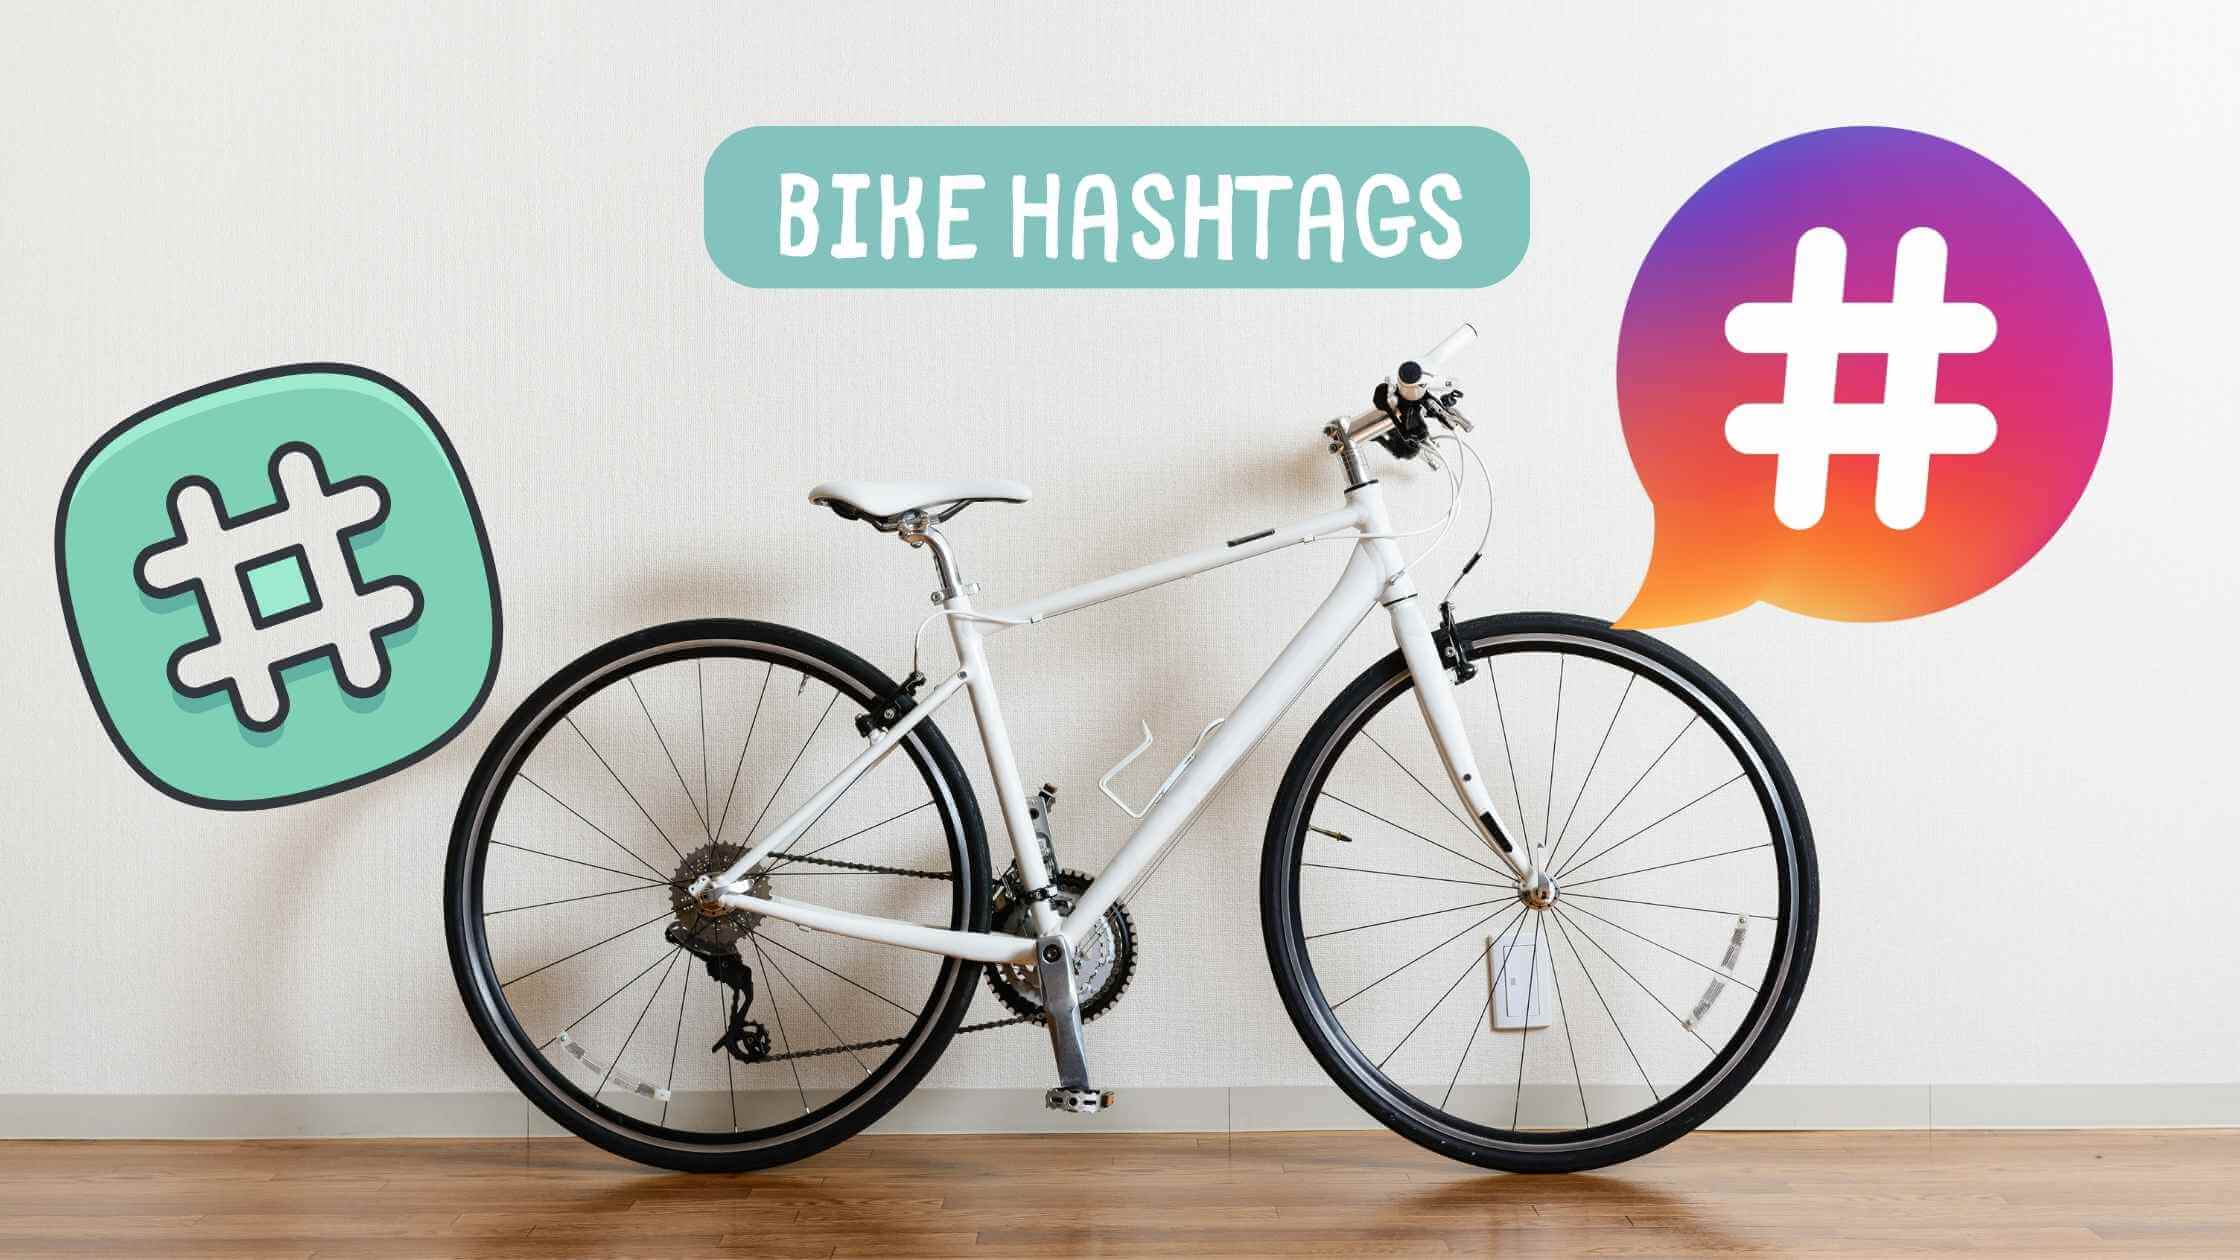 Bike Hashtags